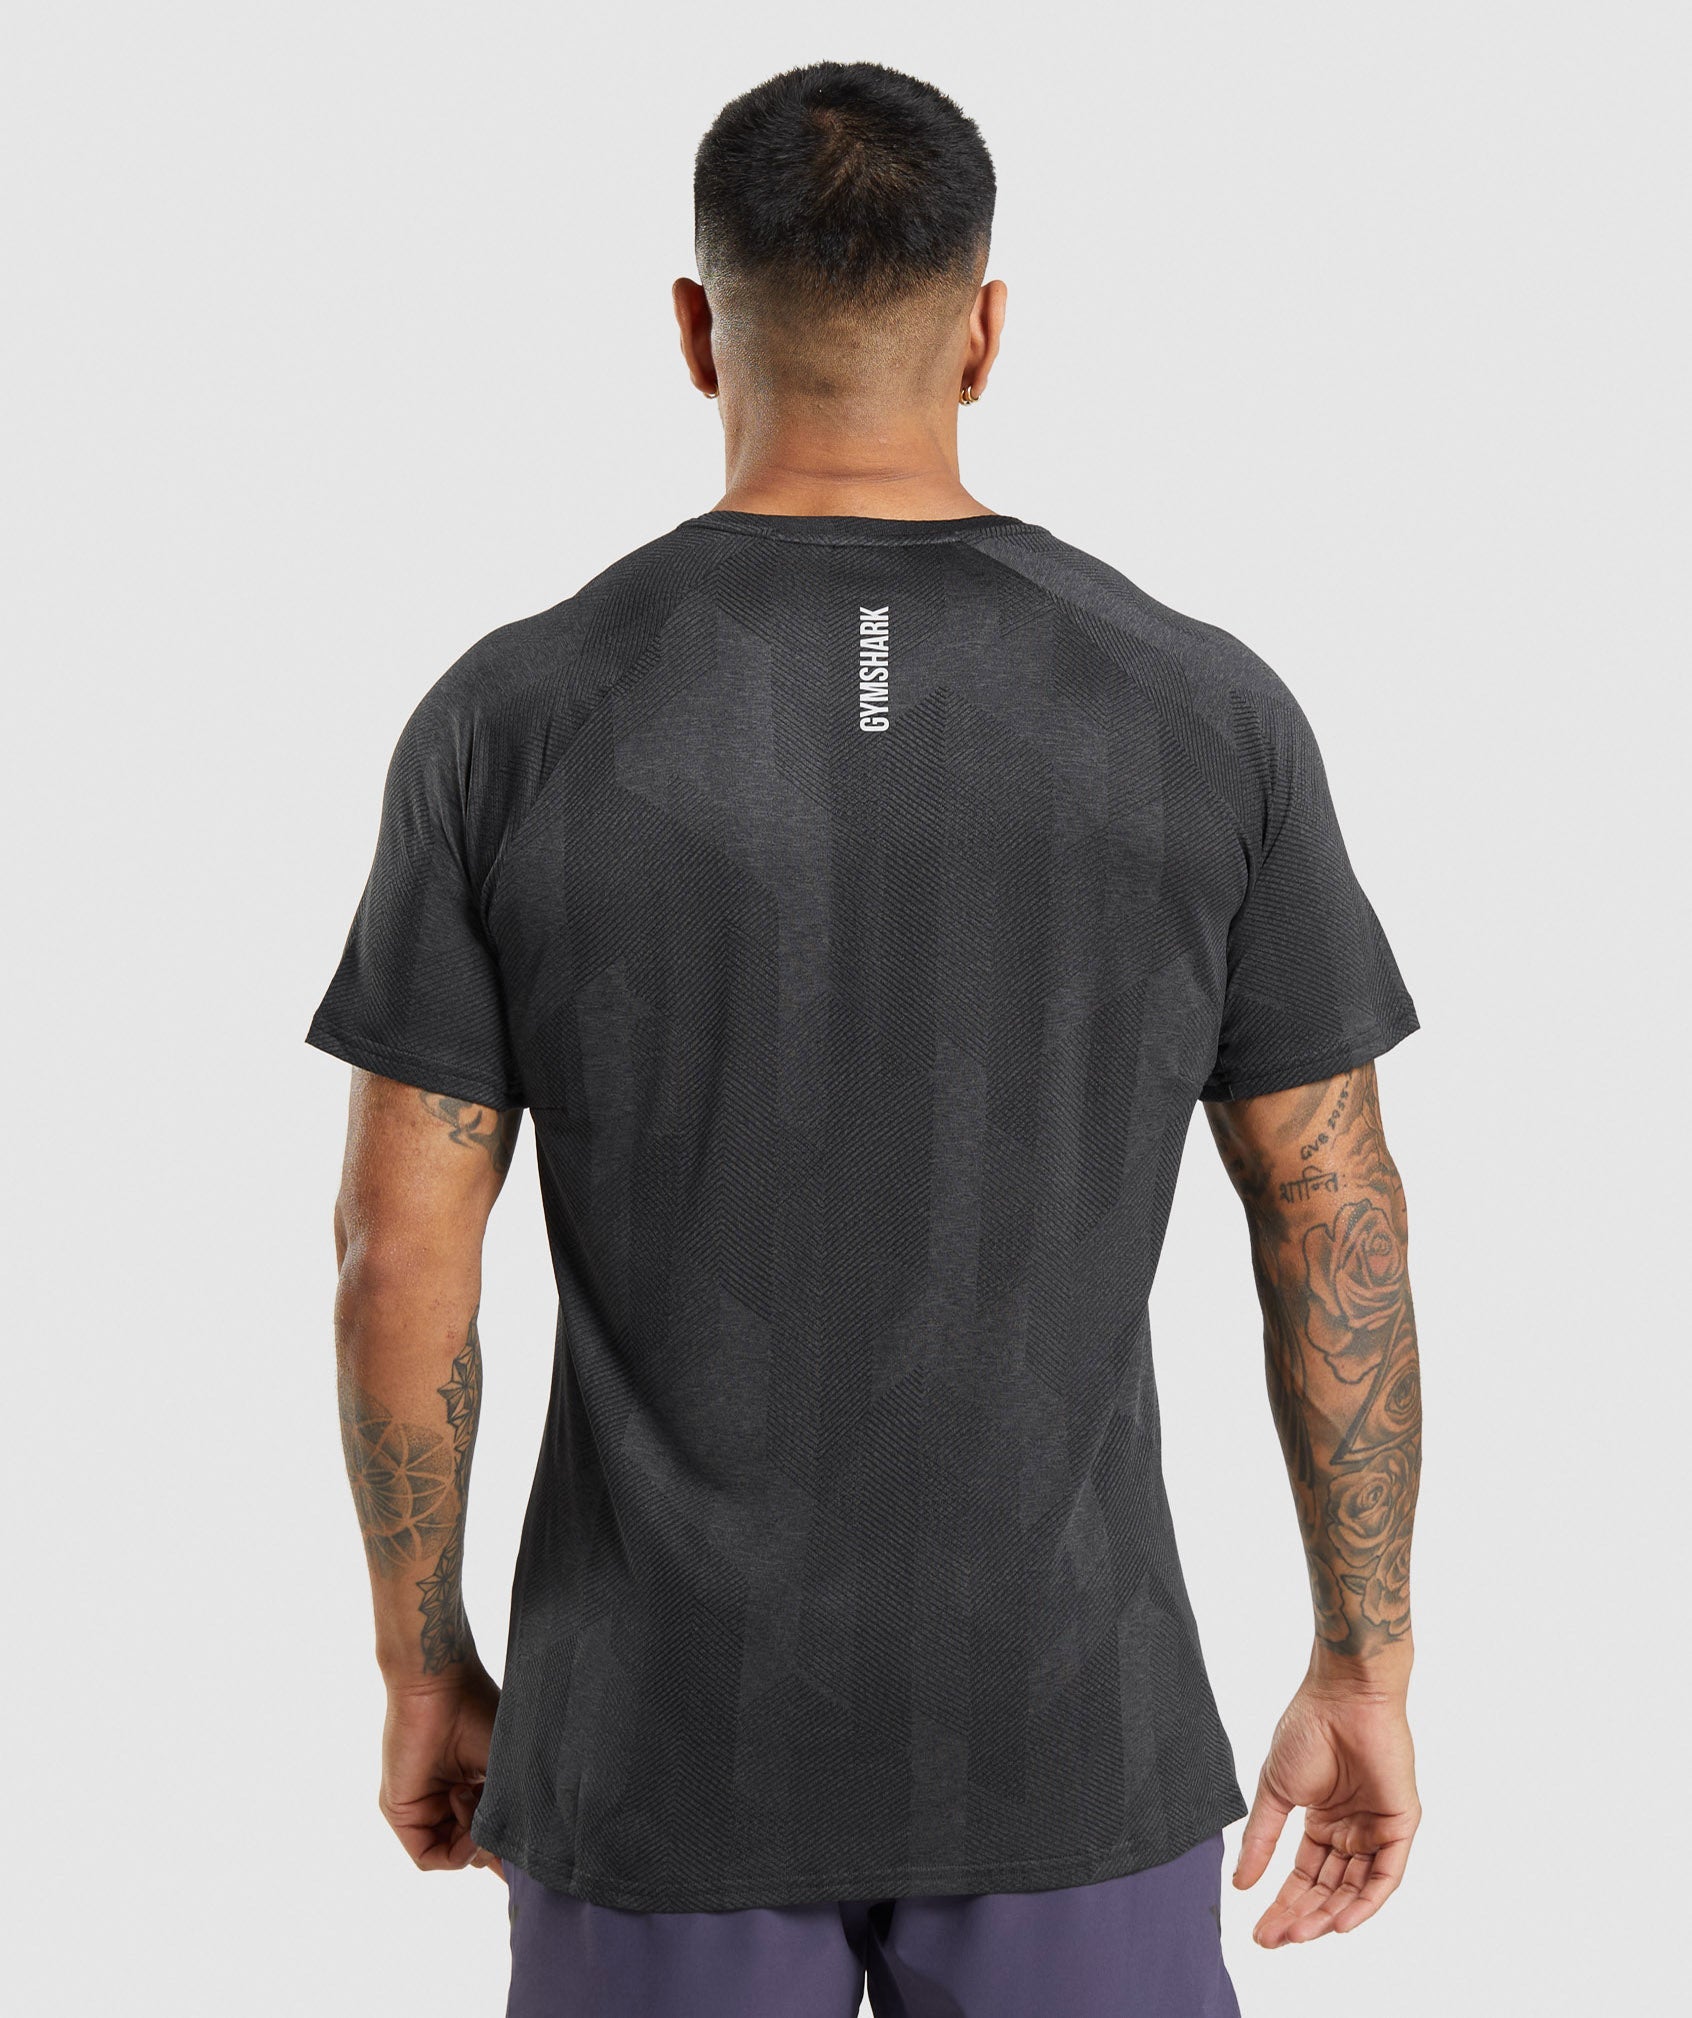 Apex T-Shirt in Black/Onyx Grey - view 3